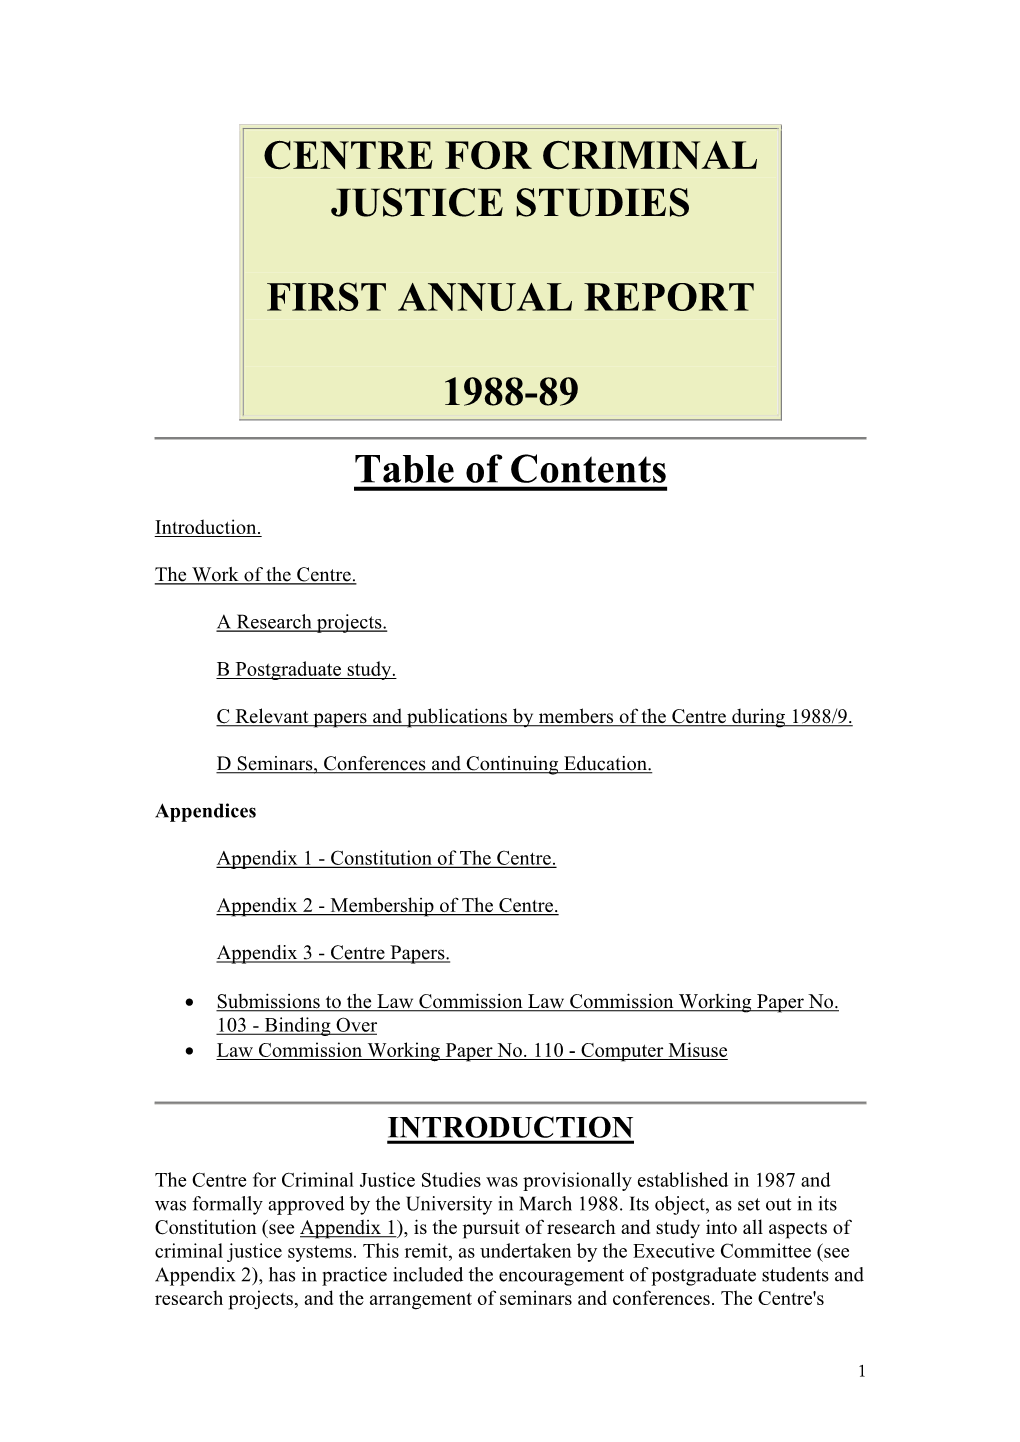 Annual Report 1988-89